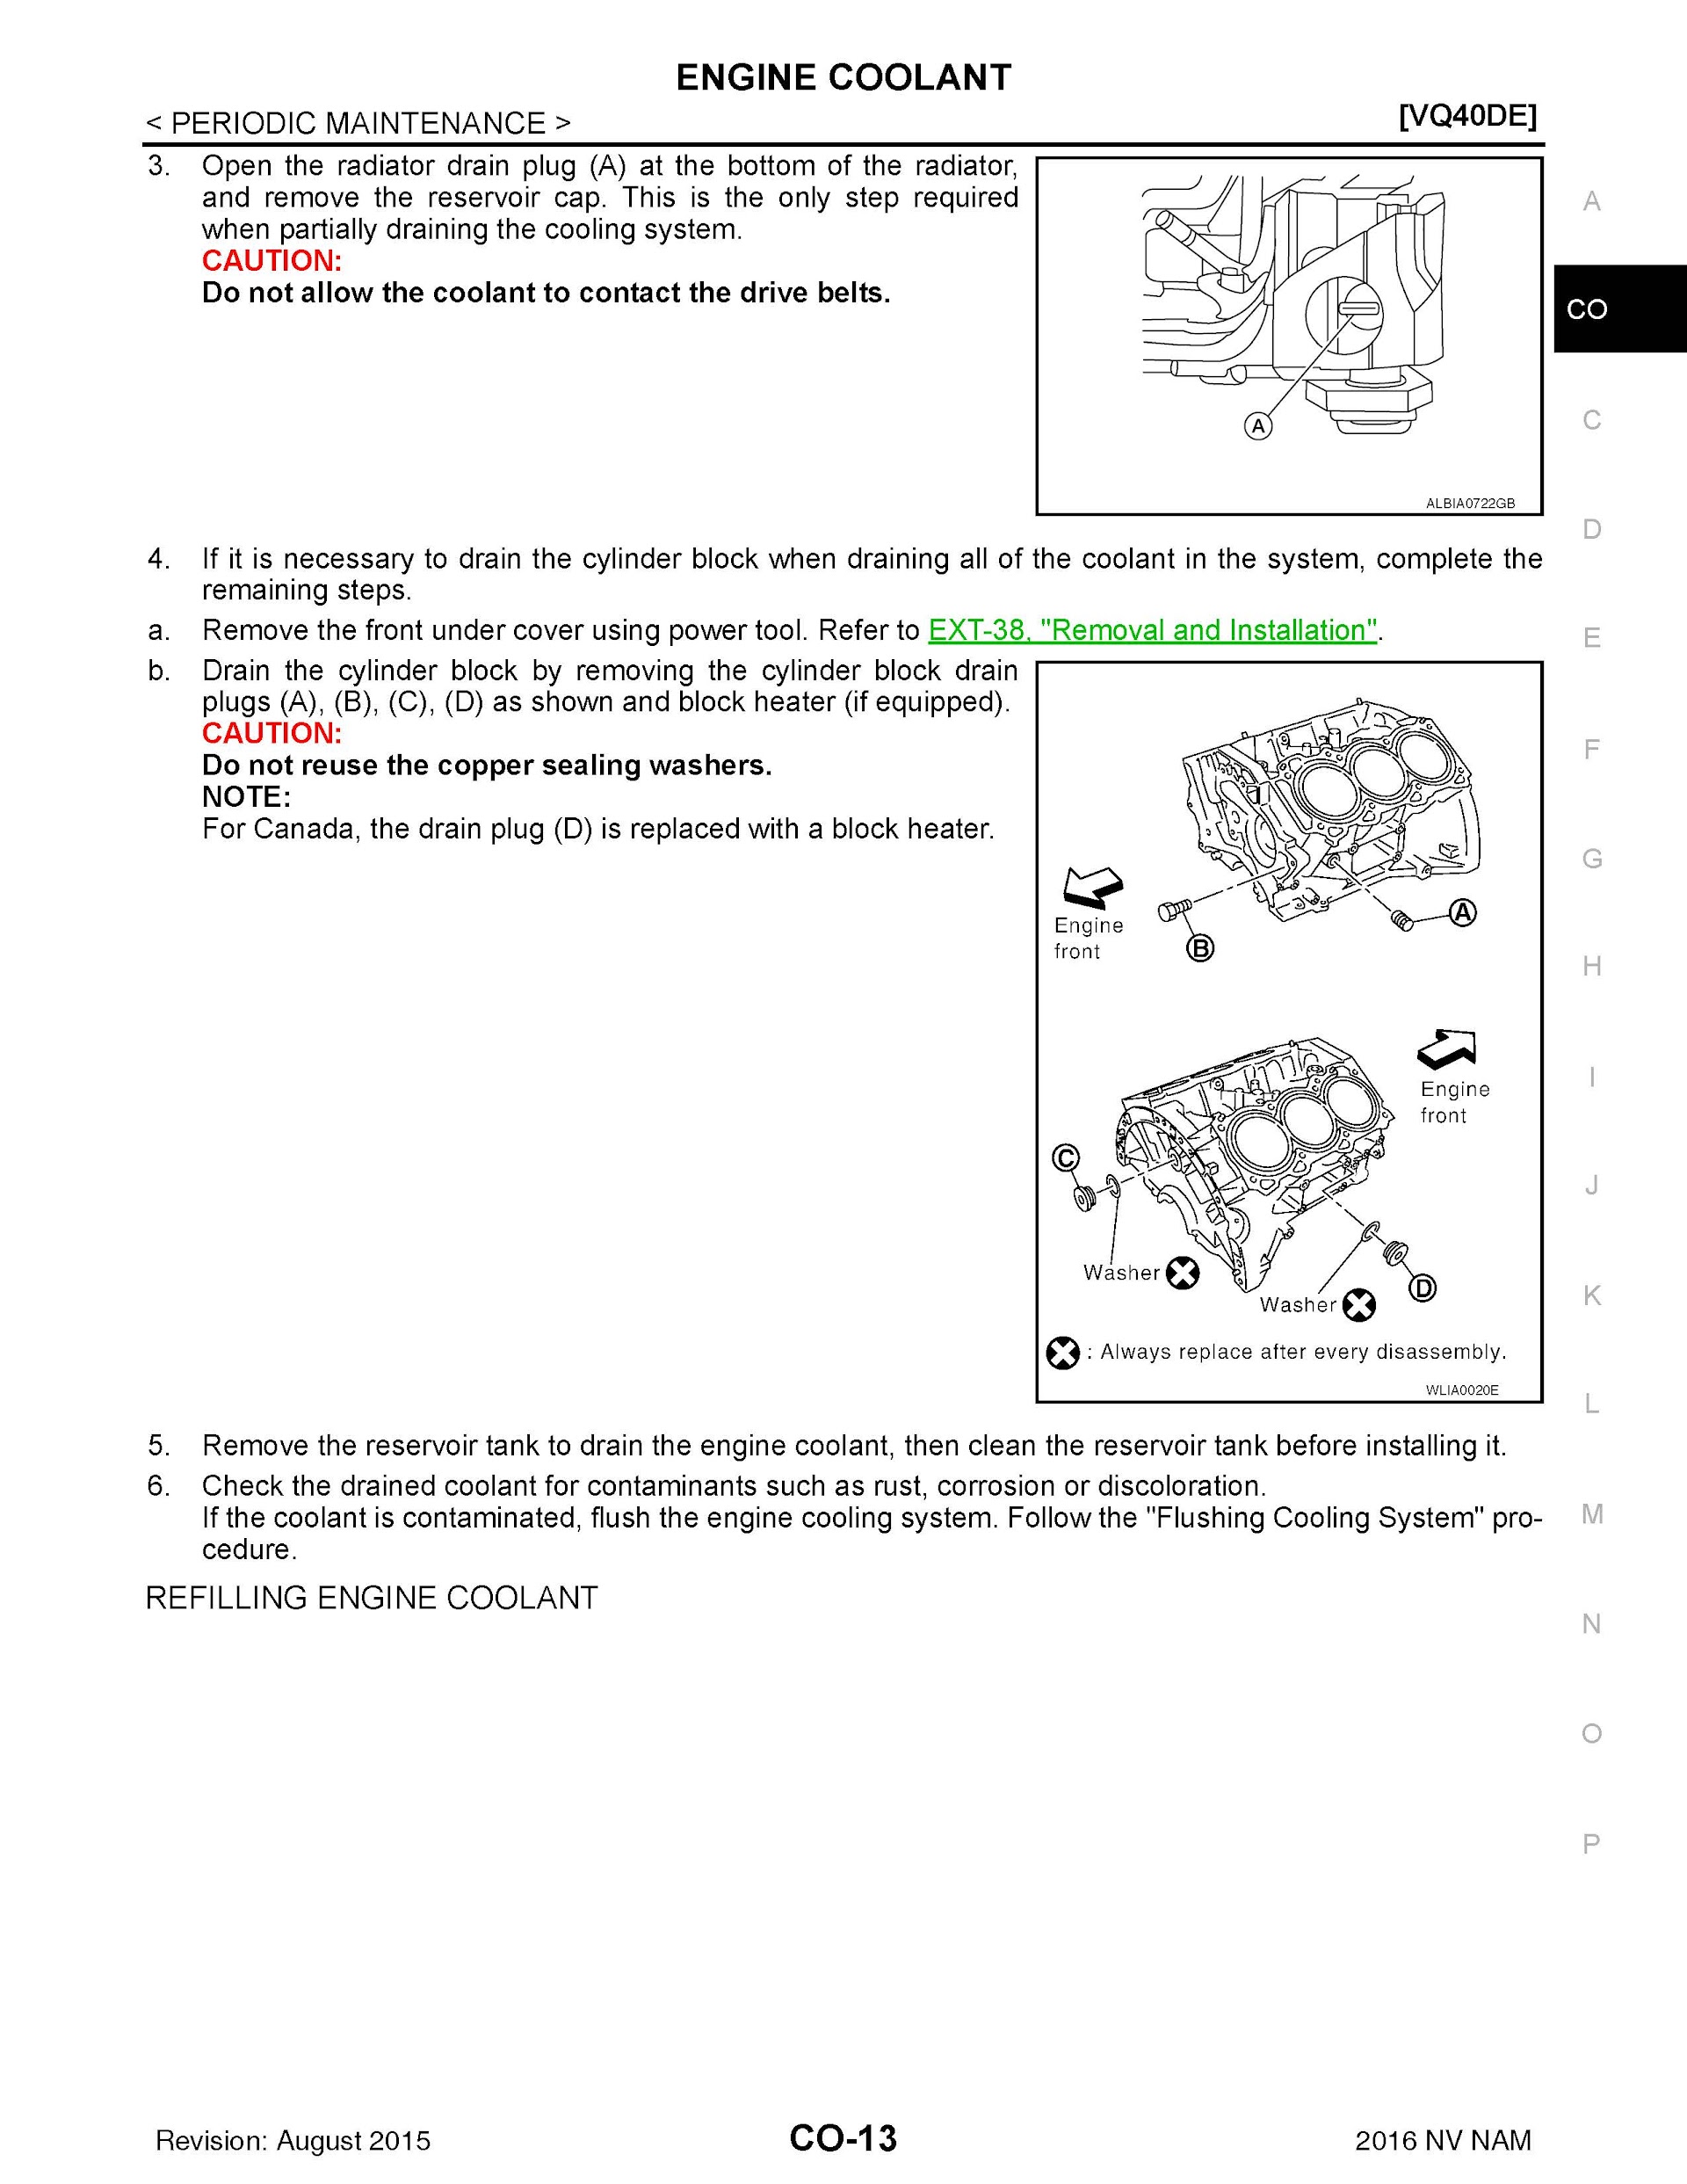 2016 Nissan NV Passenger Repair Manual, Engine Coolant